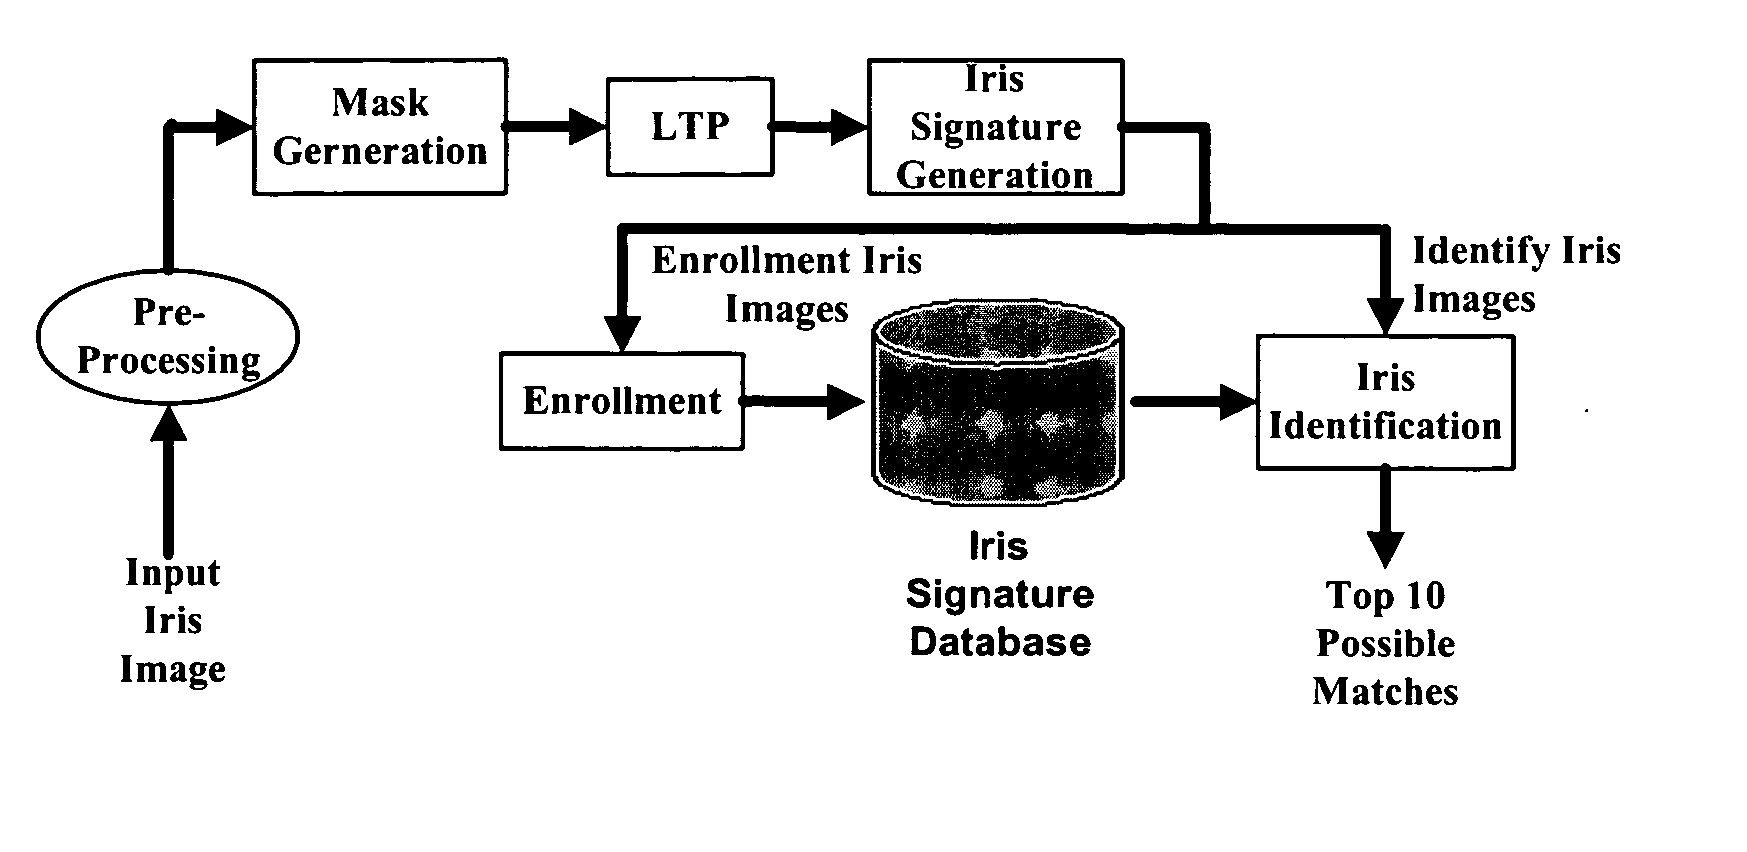 One-dimensional iris signature generation system and method